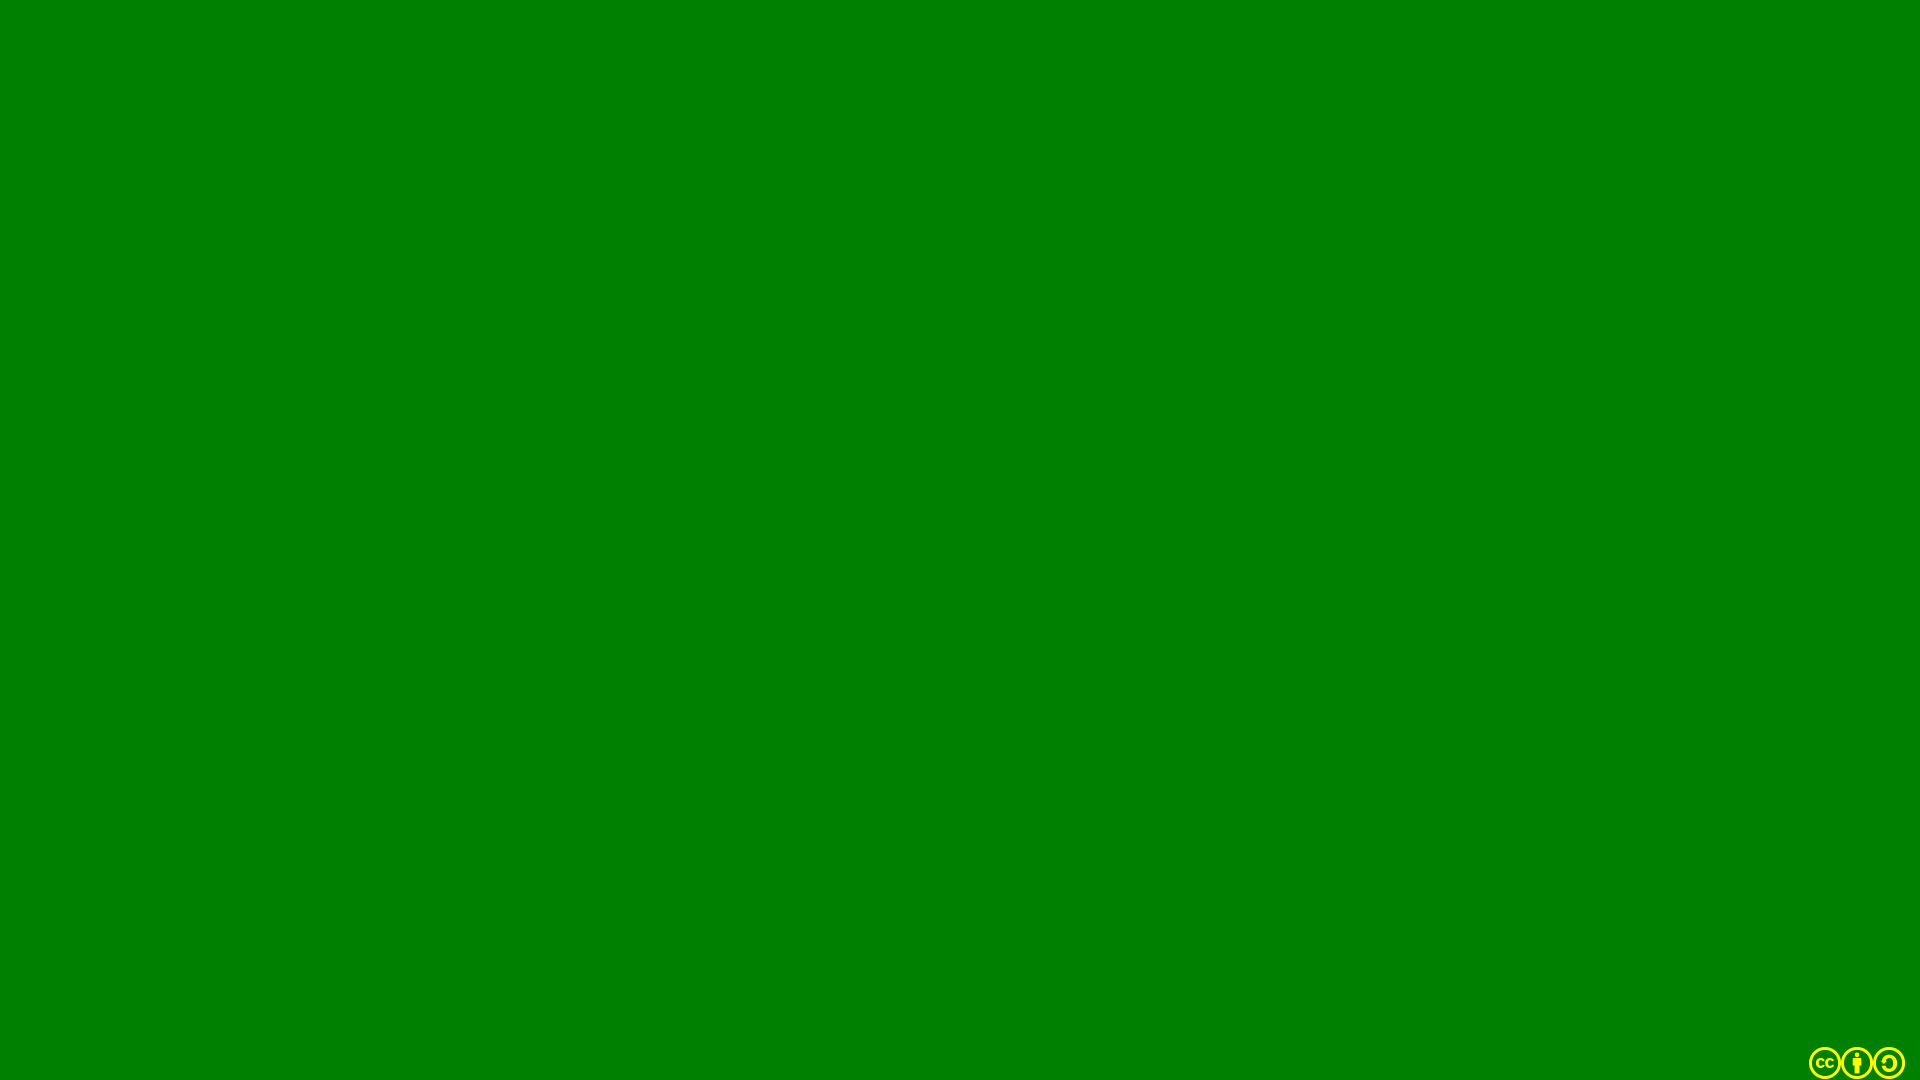 green-cc-by.jpg